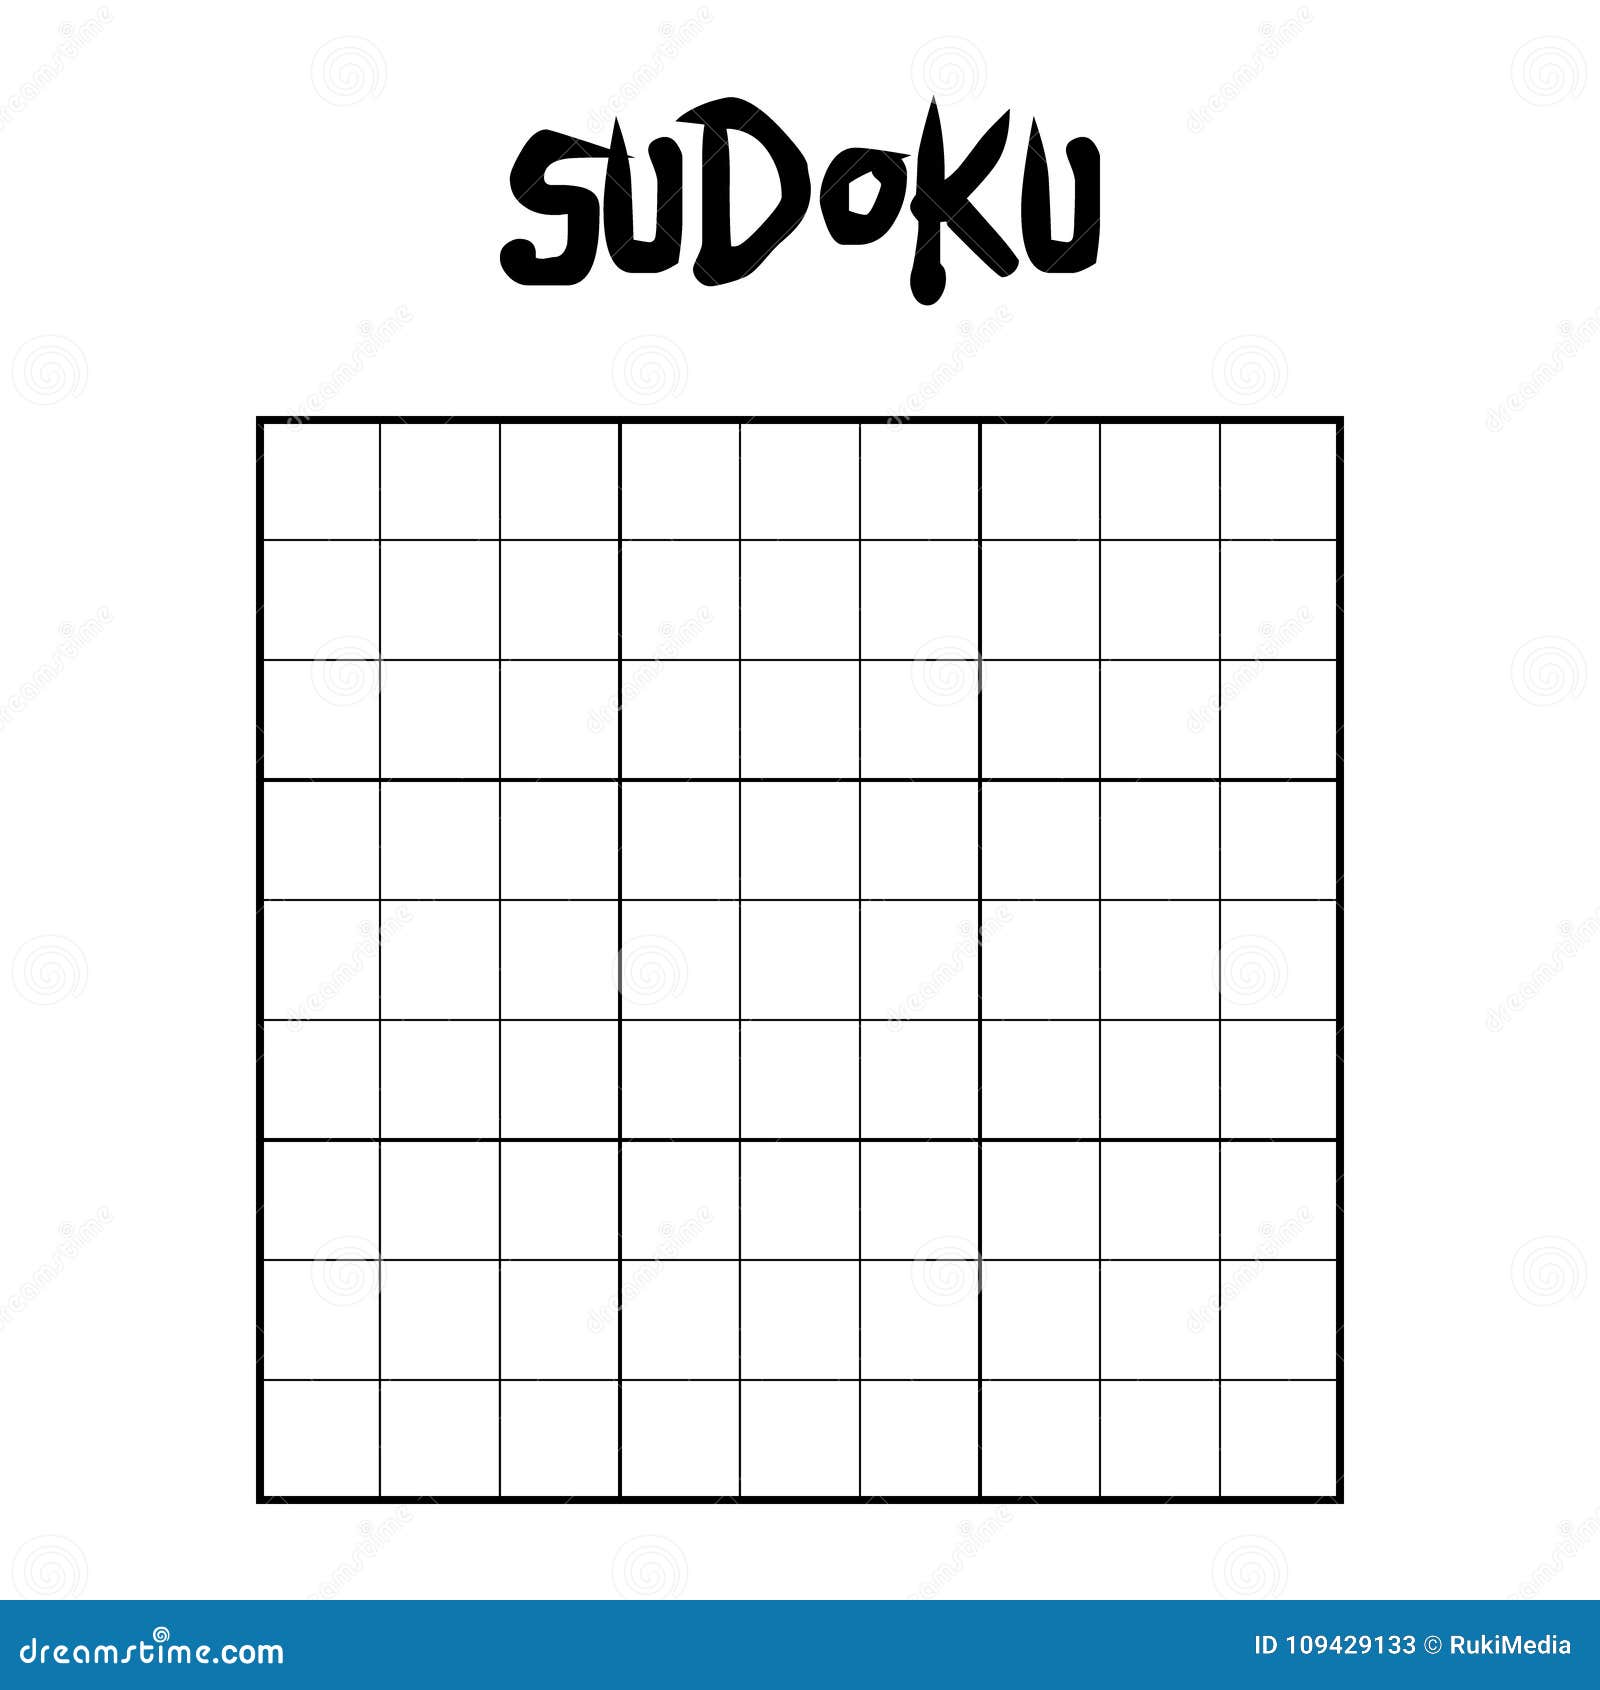 sudoku grid stock illustrations 619 sudoku grid stock illustrations vectors clipart dreamstime